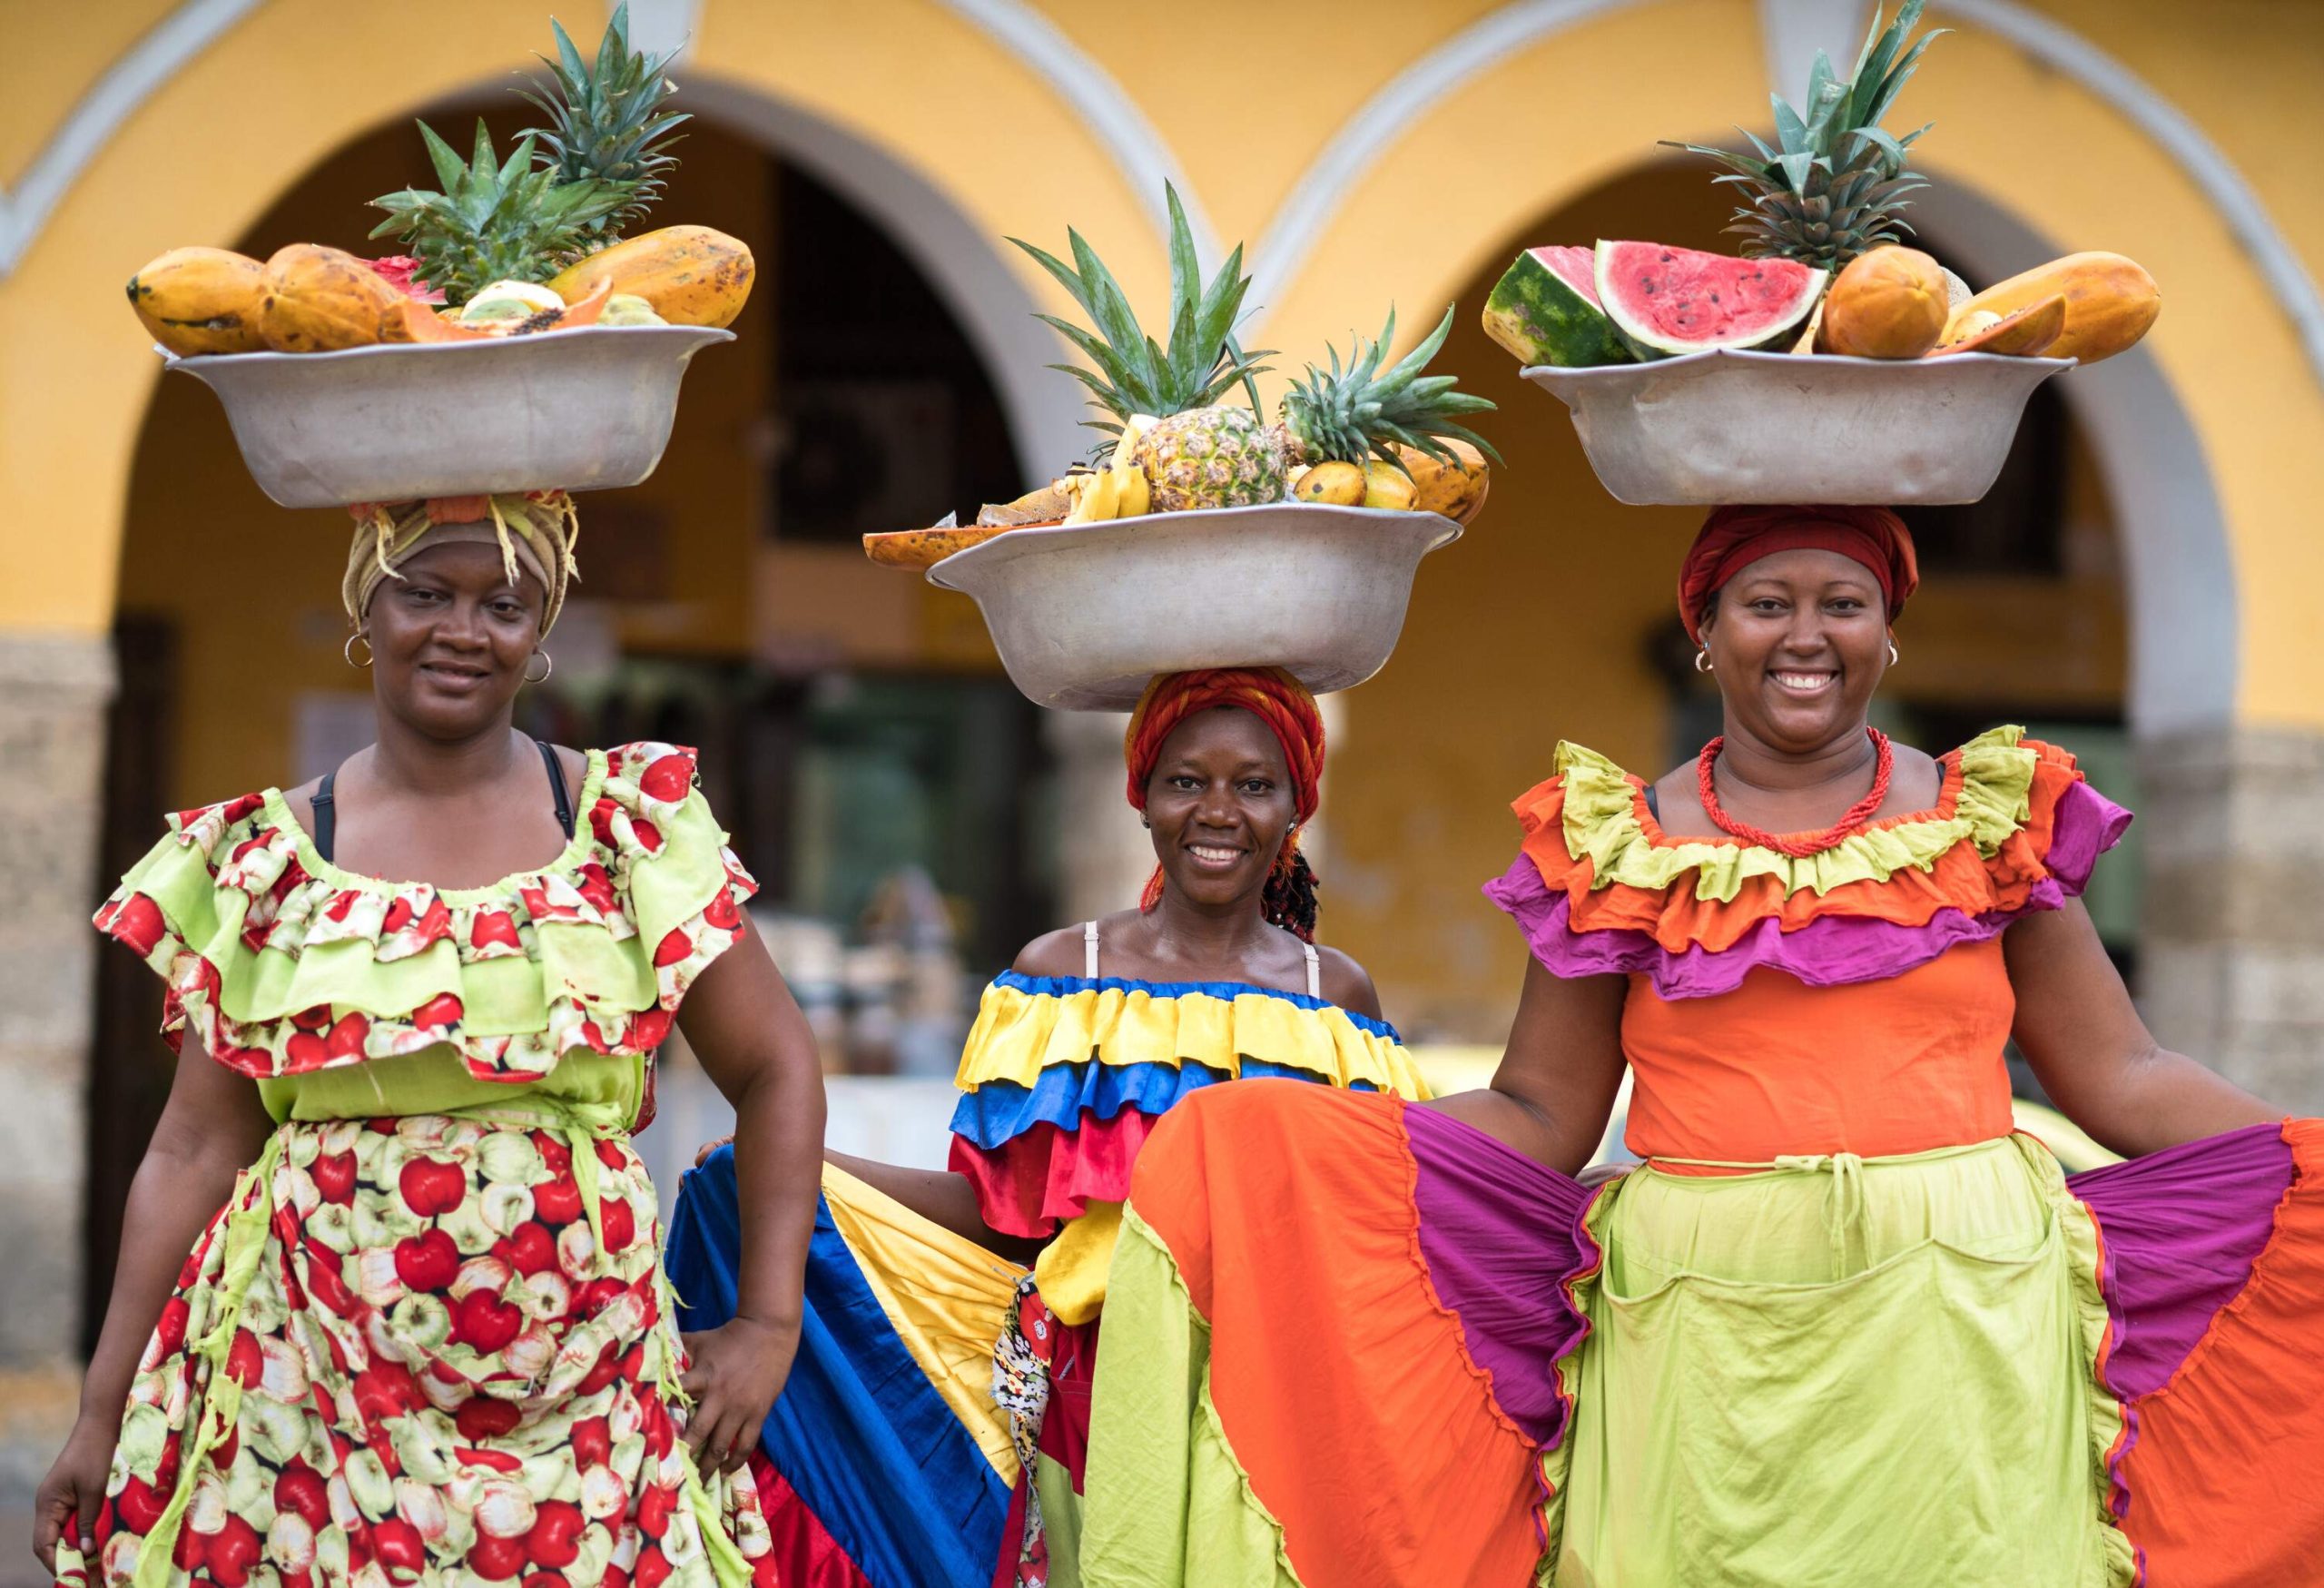 Three joyful women, dressed in colourful attire, skillfully balancing basins of fruits on their heads.